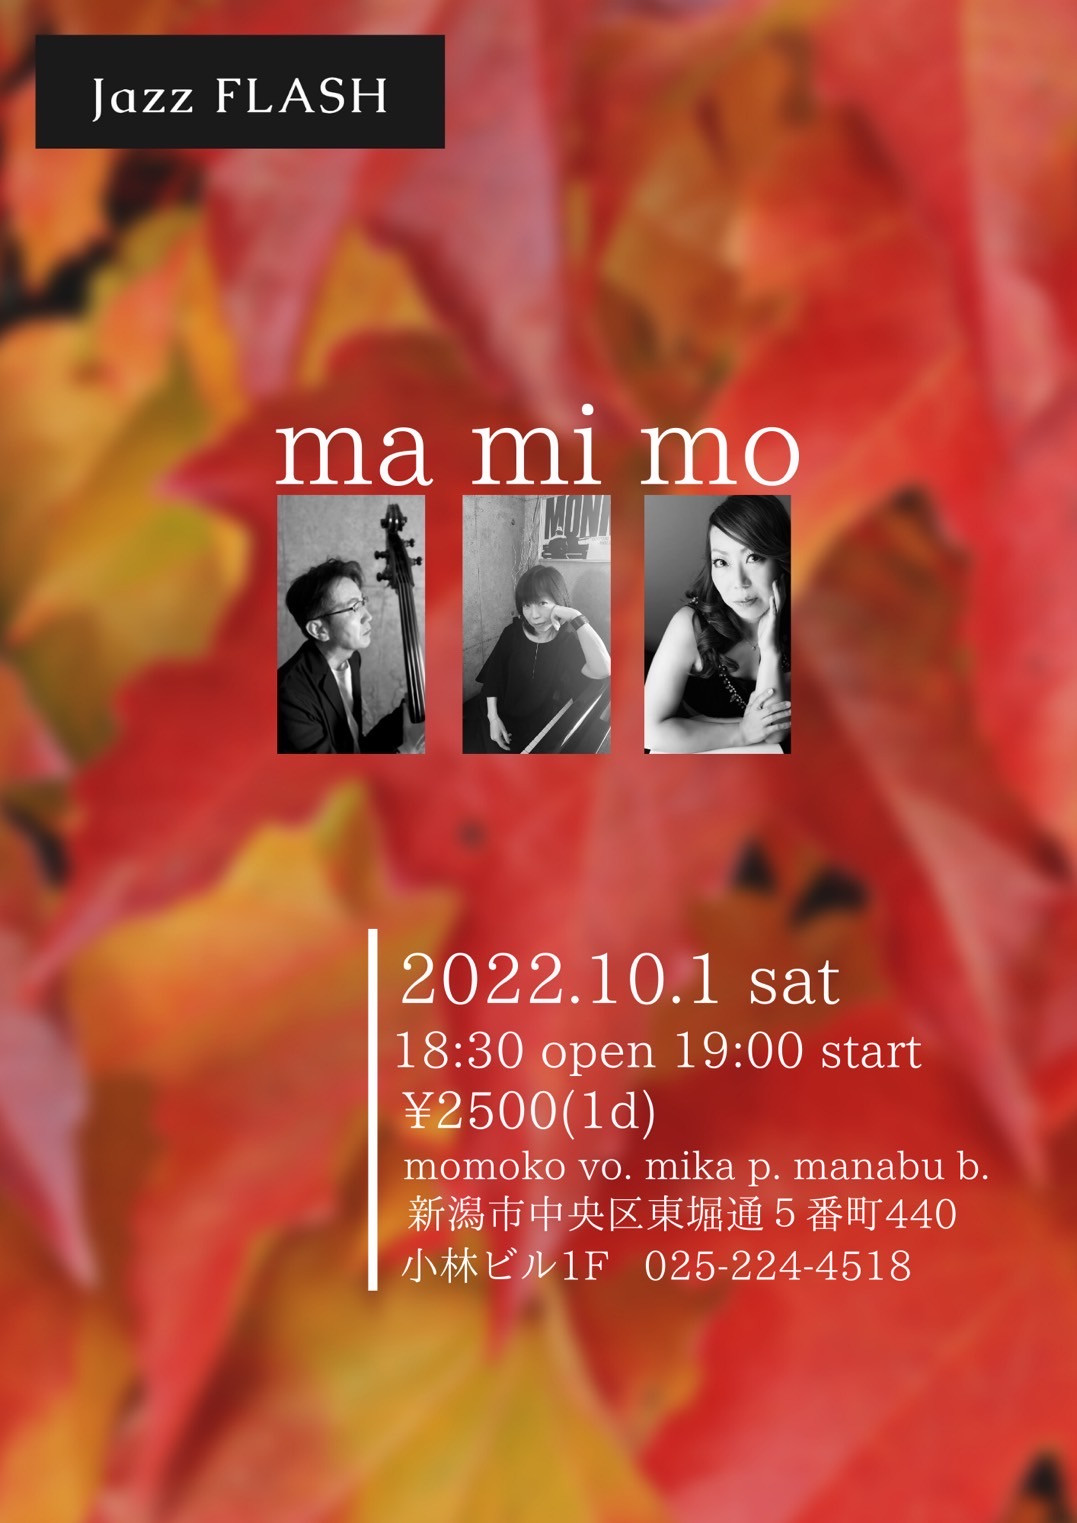 10/1(土) ma mi mo@Jazz FLASH